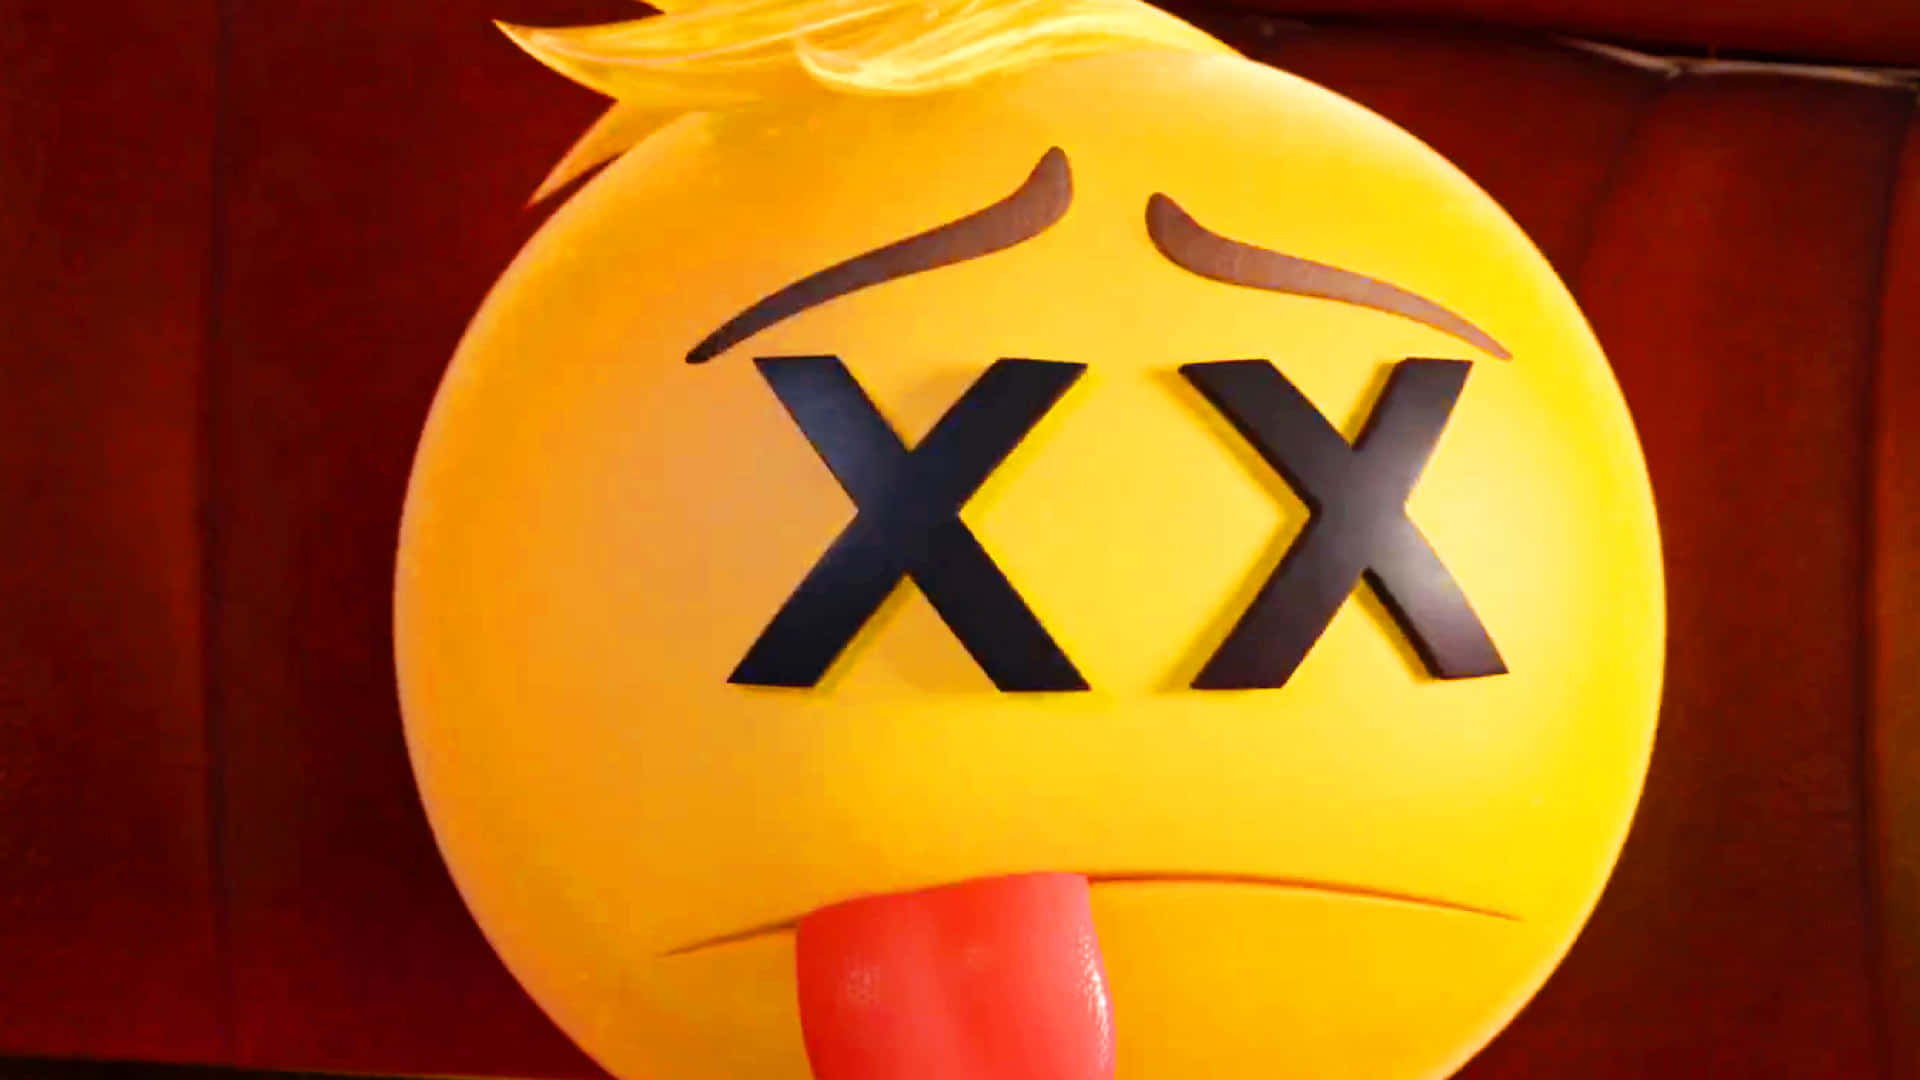 A Giant Emoji Expressing Sadness from The Emoji Movie Wallpaper